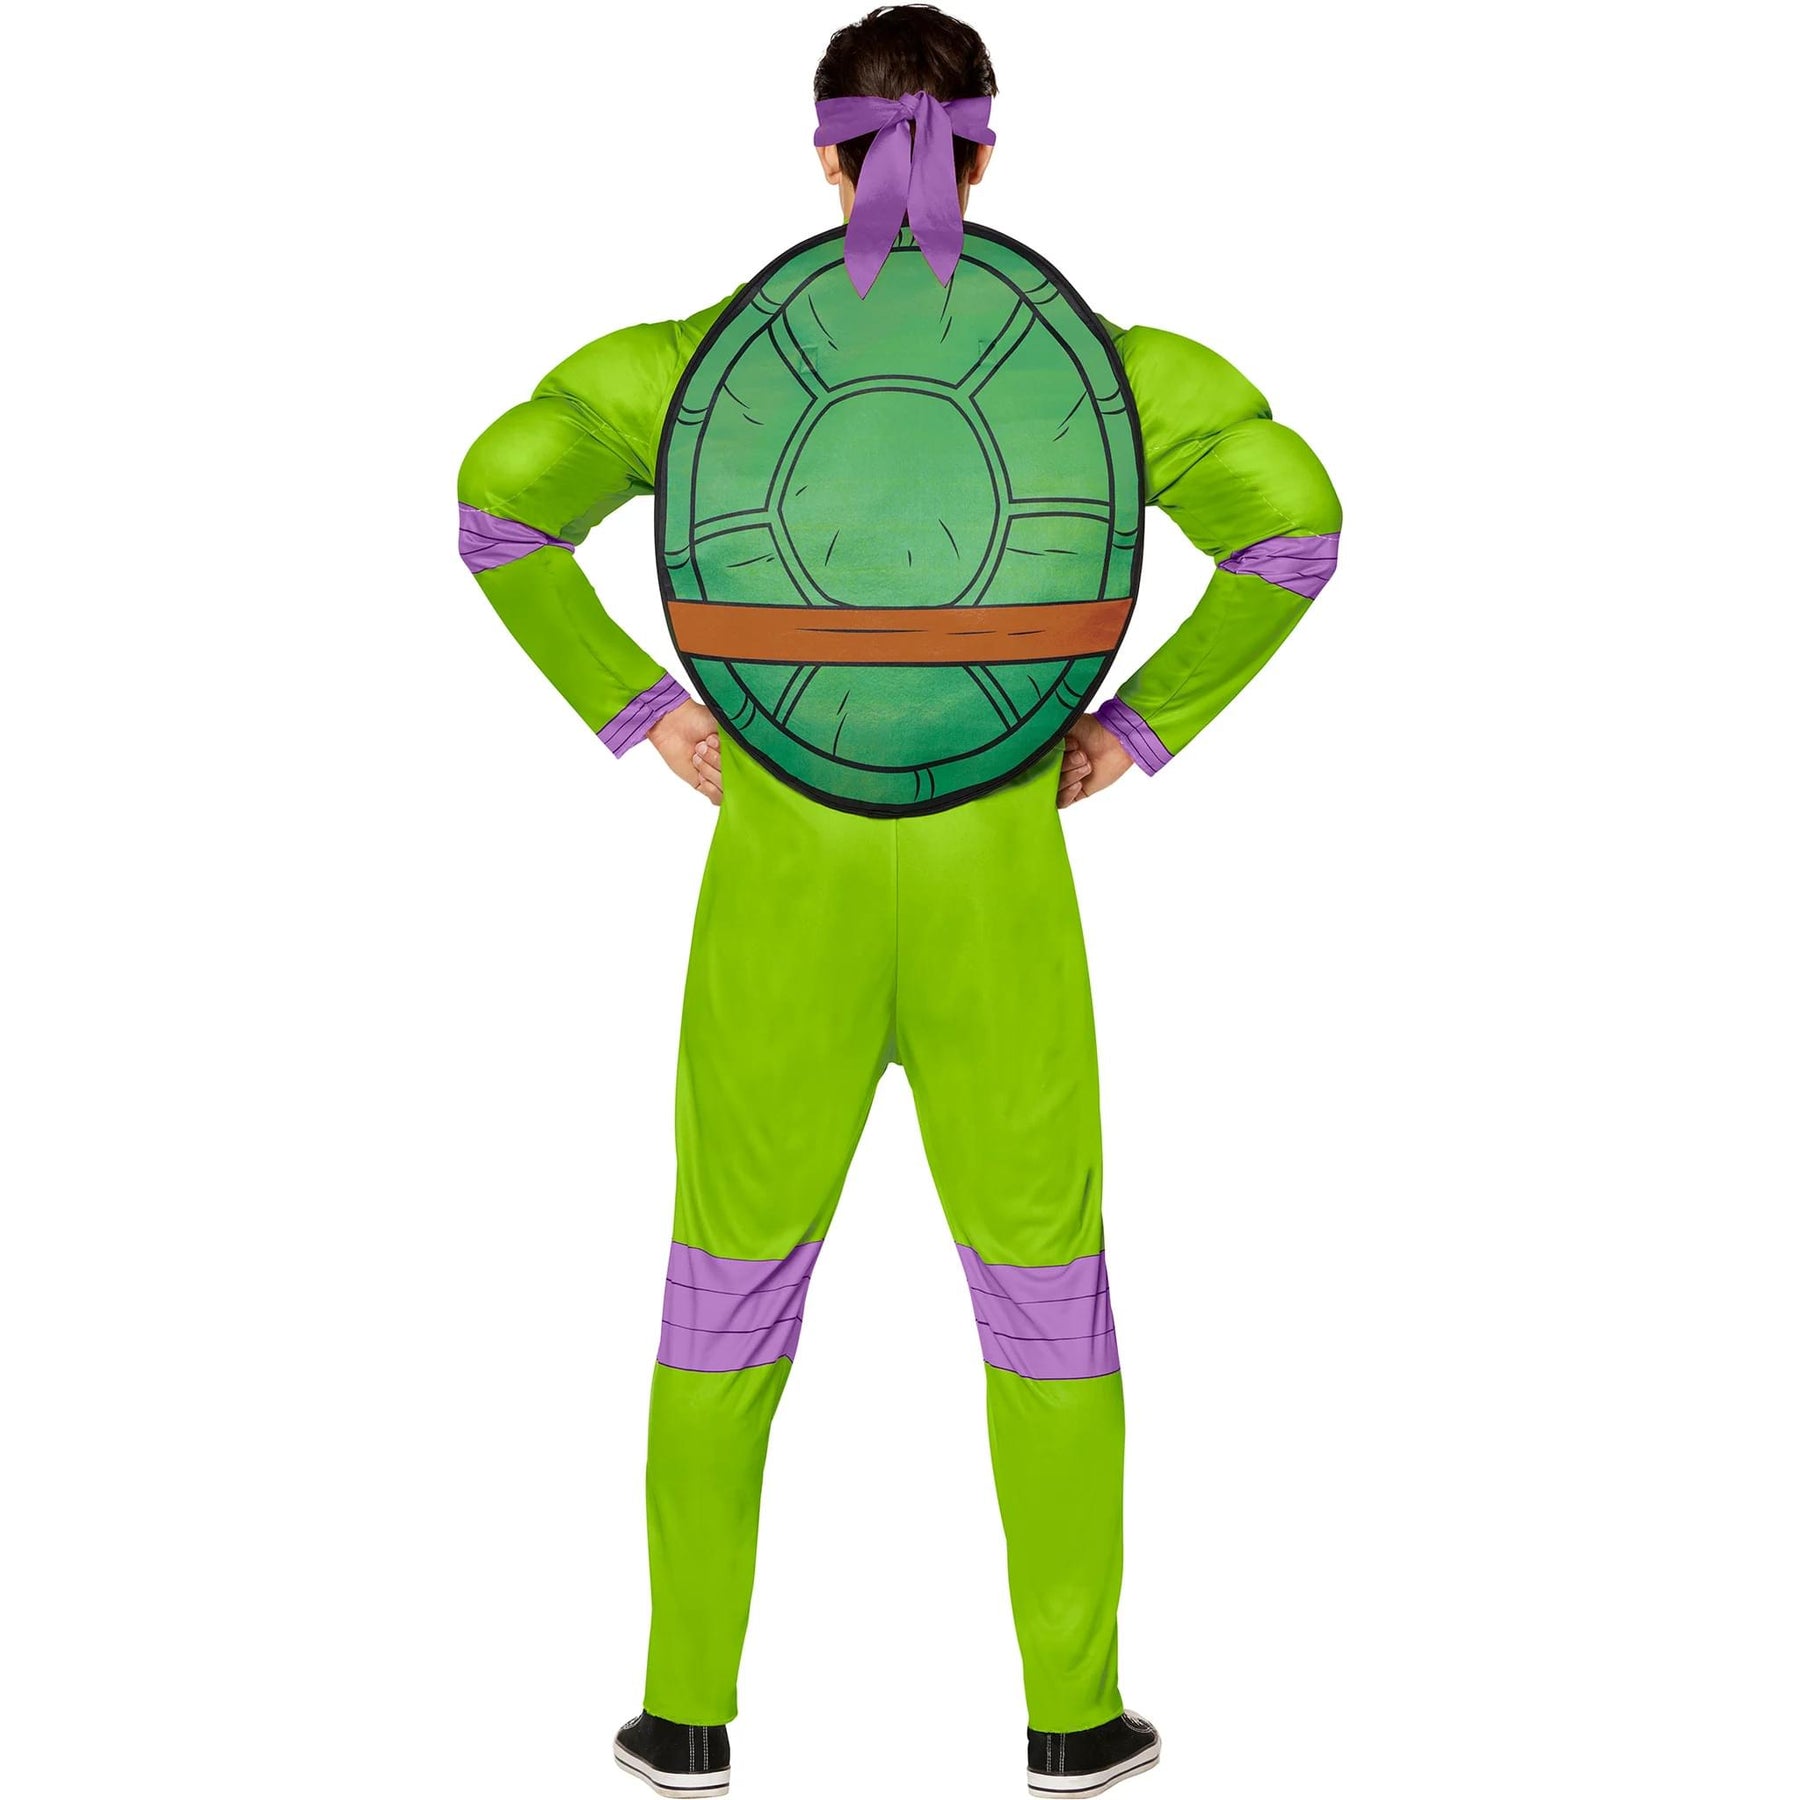 InSpirit Designs Teenage Mutant Ninja Turtles Donatello Halloween